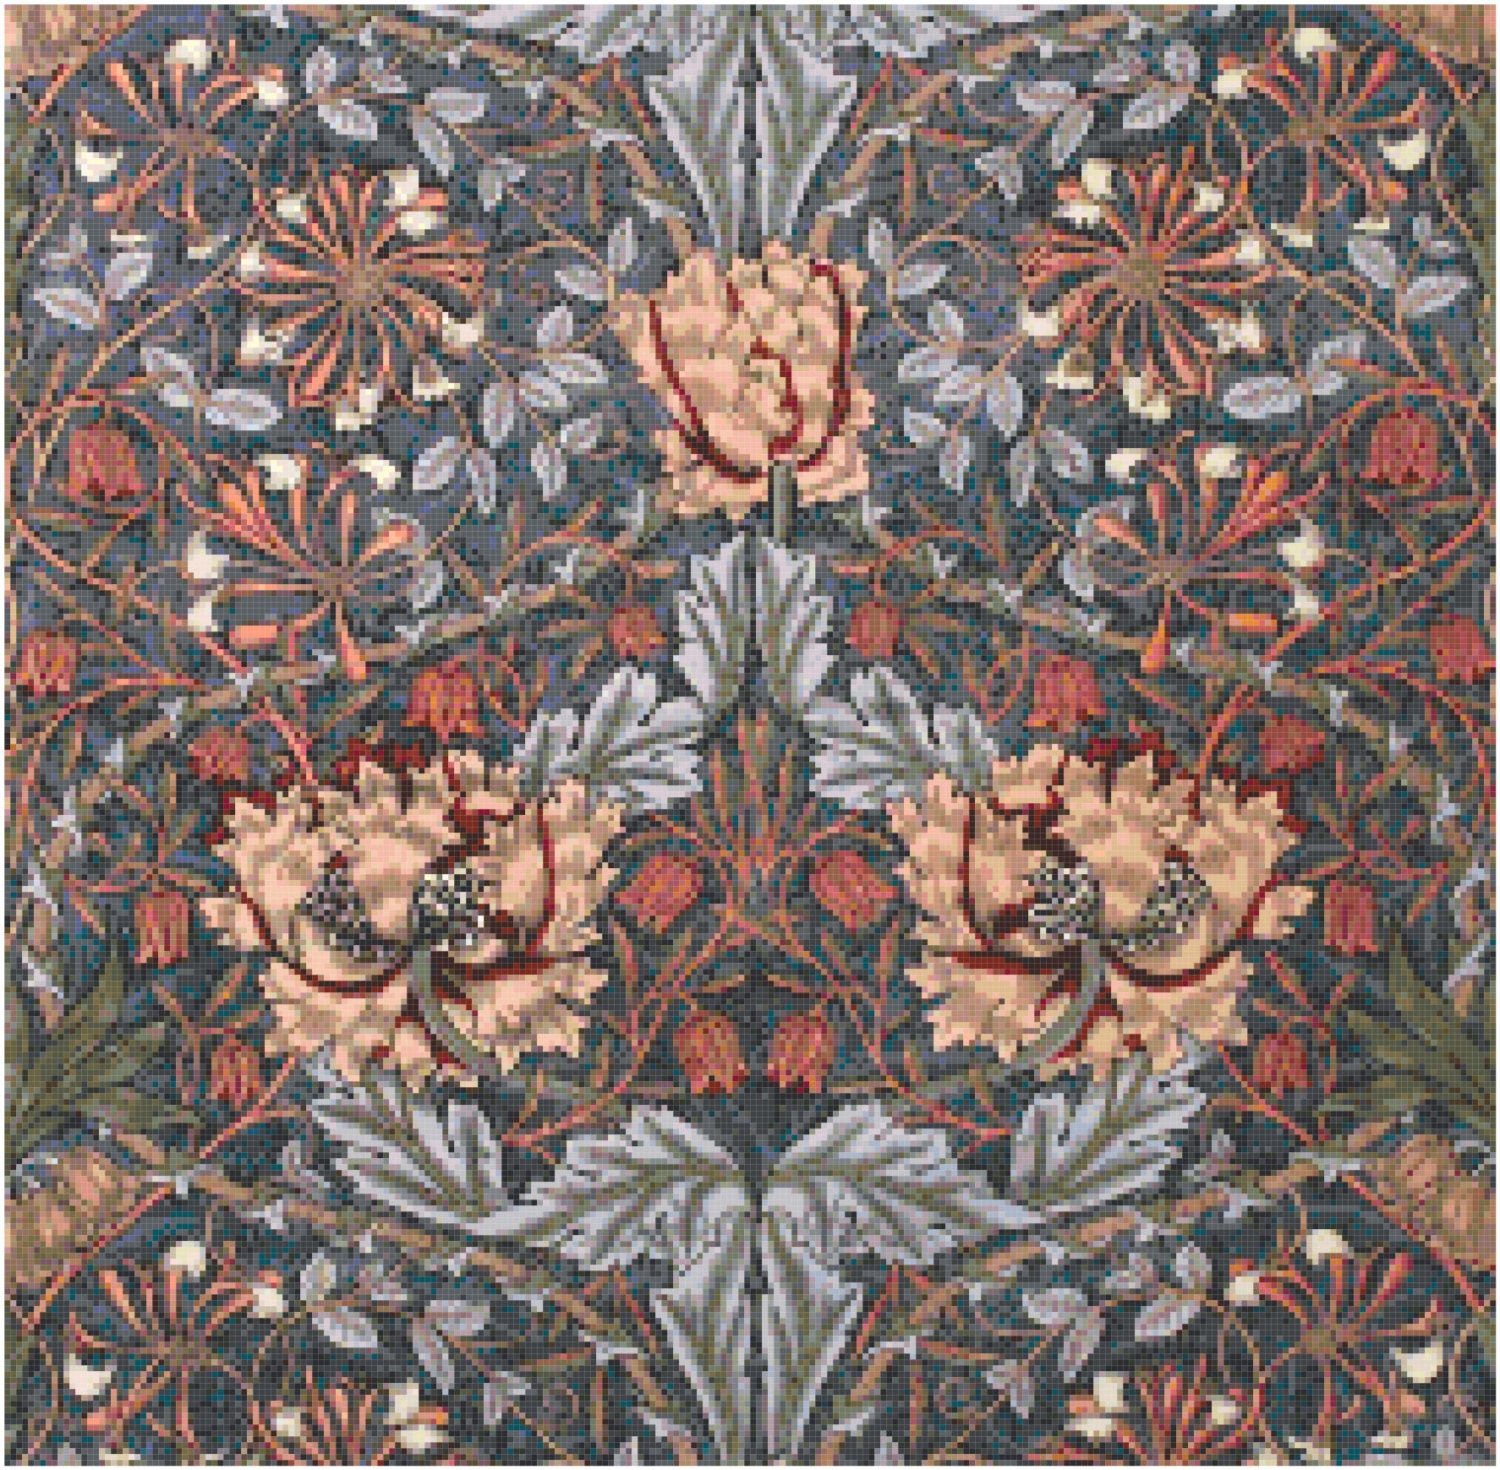 William Morris Honeysuckle Wallpaper Design Counted Cross - Etsy UK